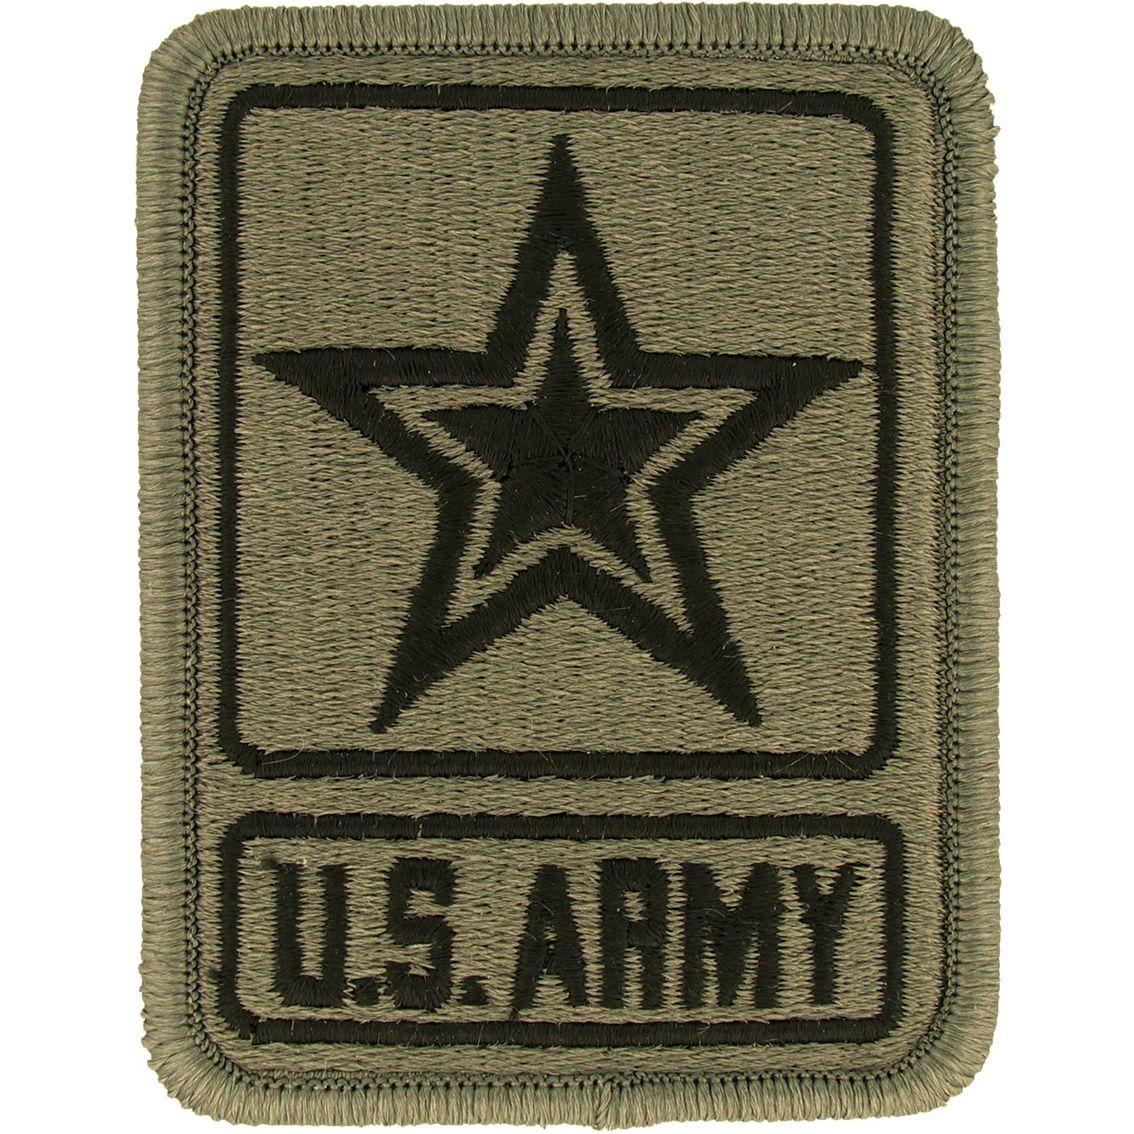 Military Unit Logo - LogoDix